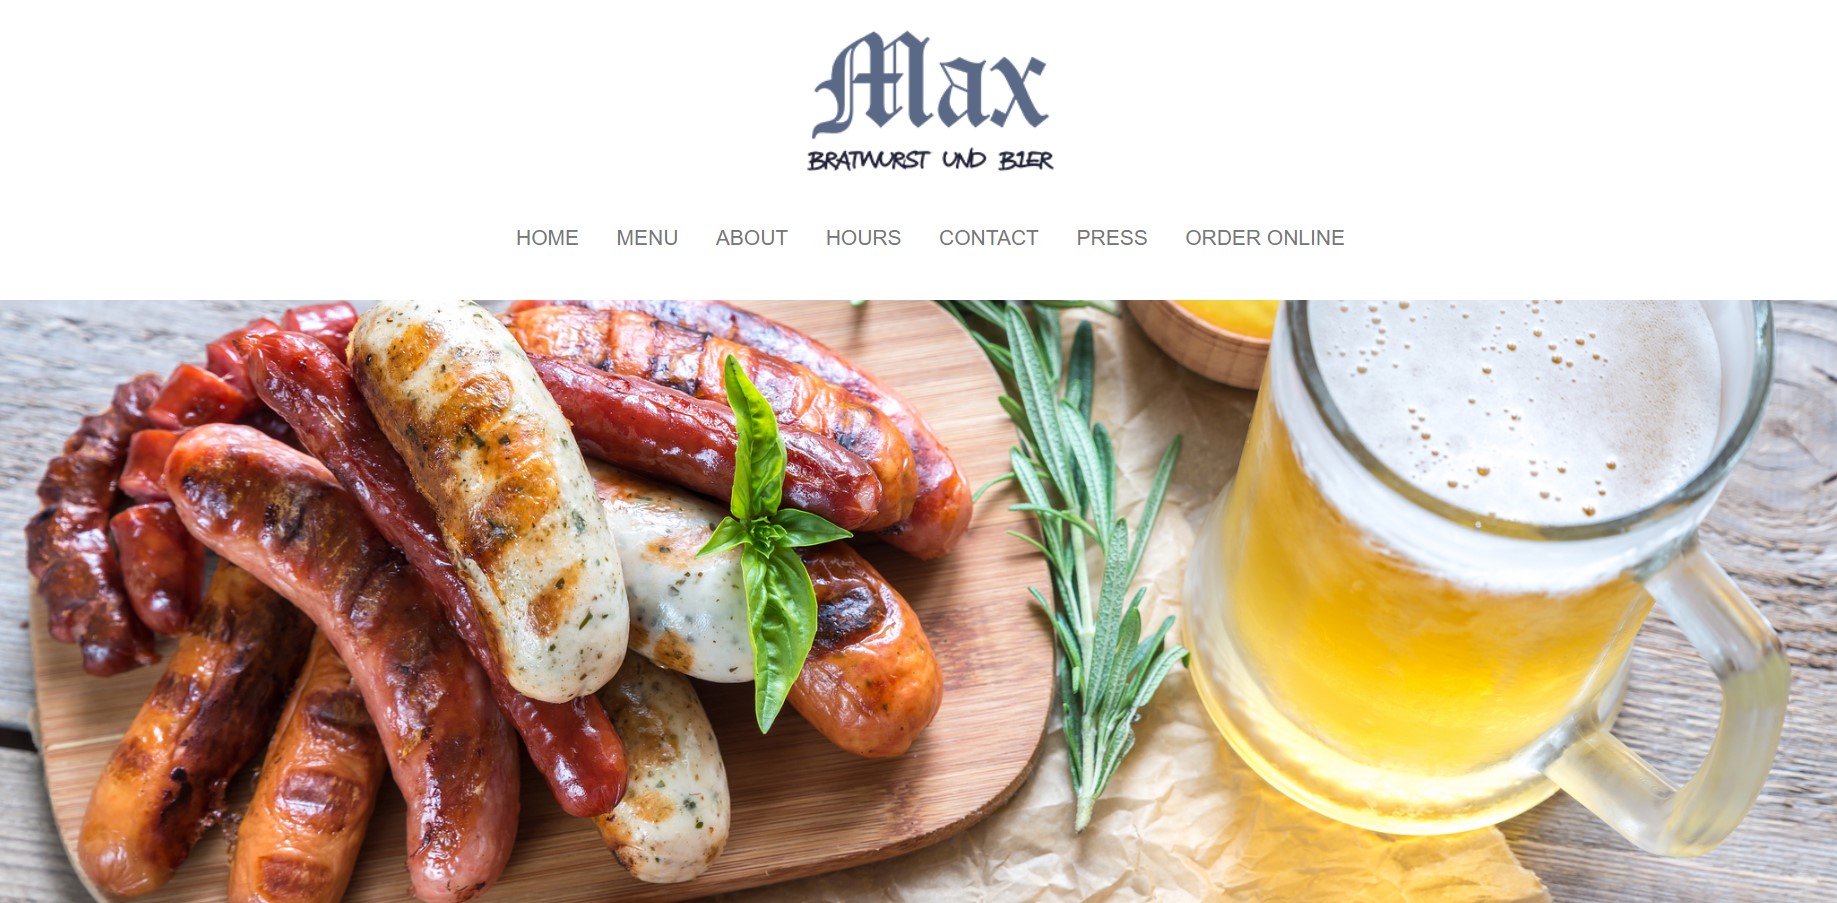 max bratwurst german restaurant in new york